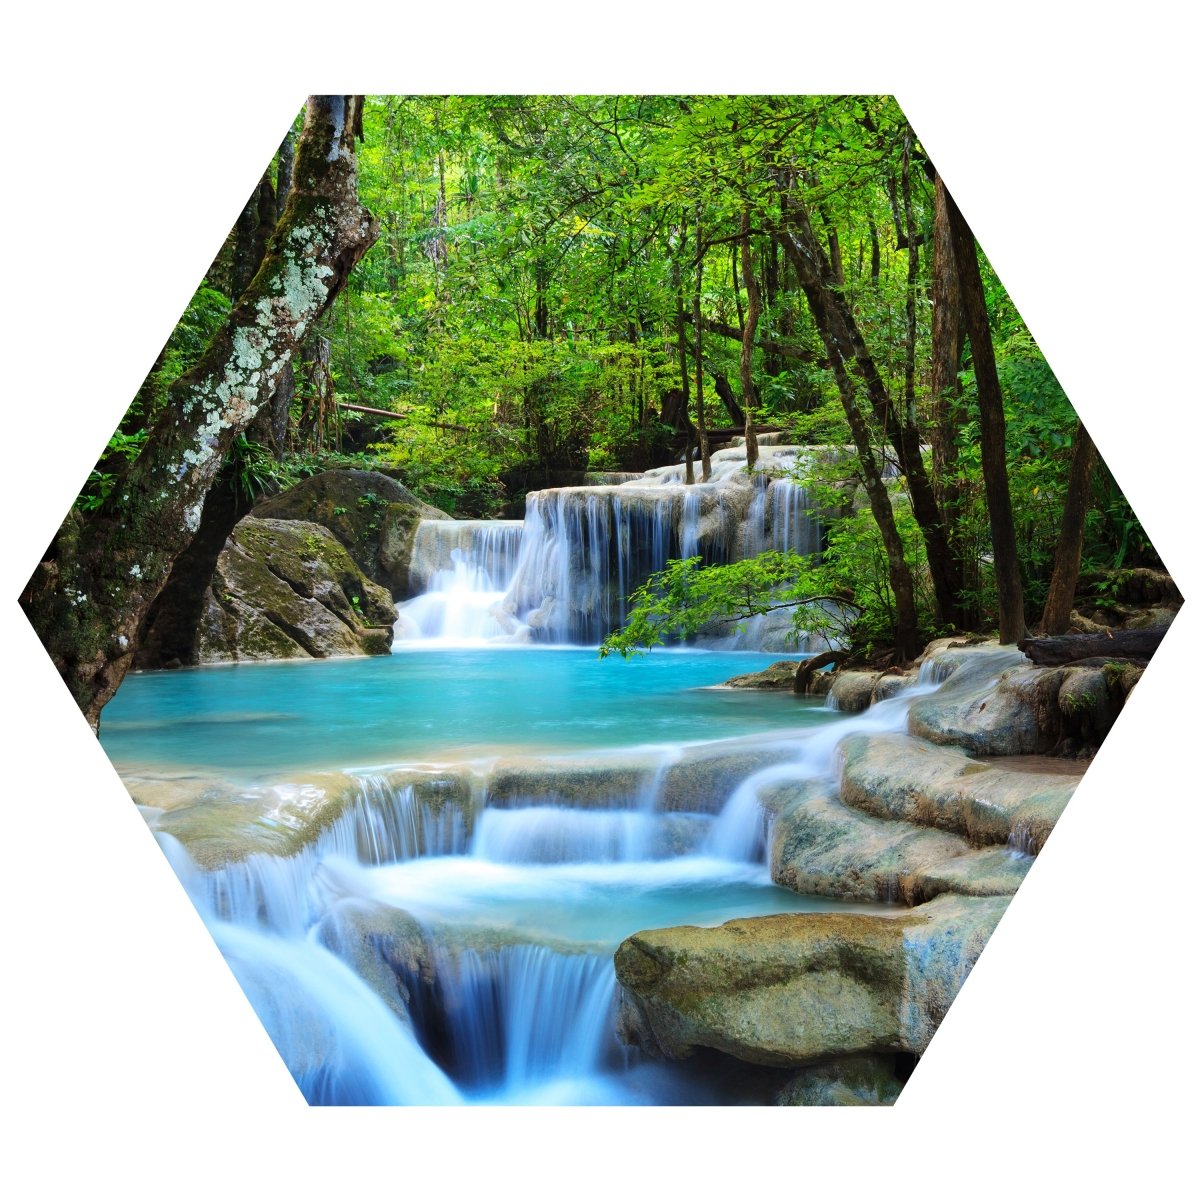 Hexagon-Fototapete Wasserfall im Wald M0001 - Bild 11